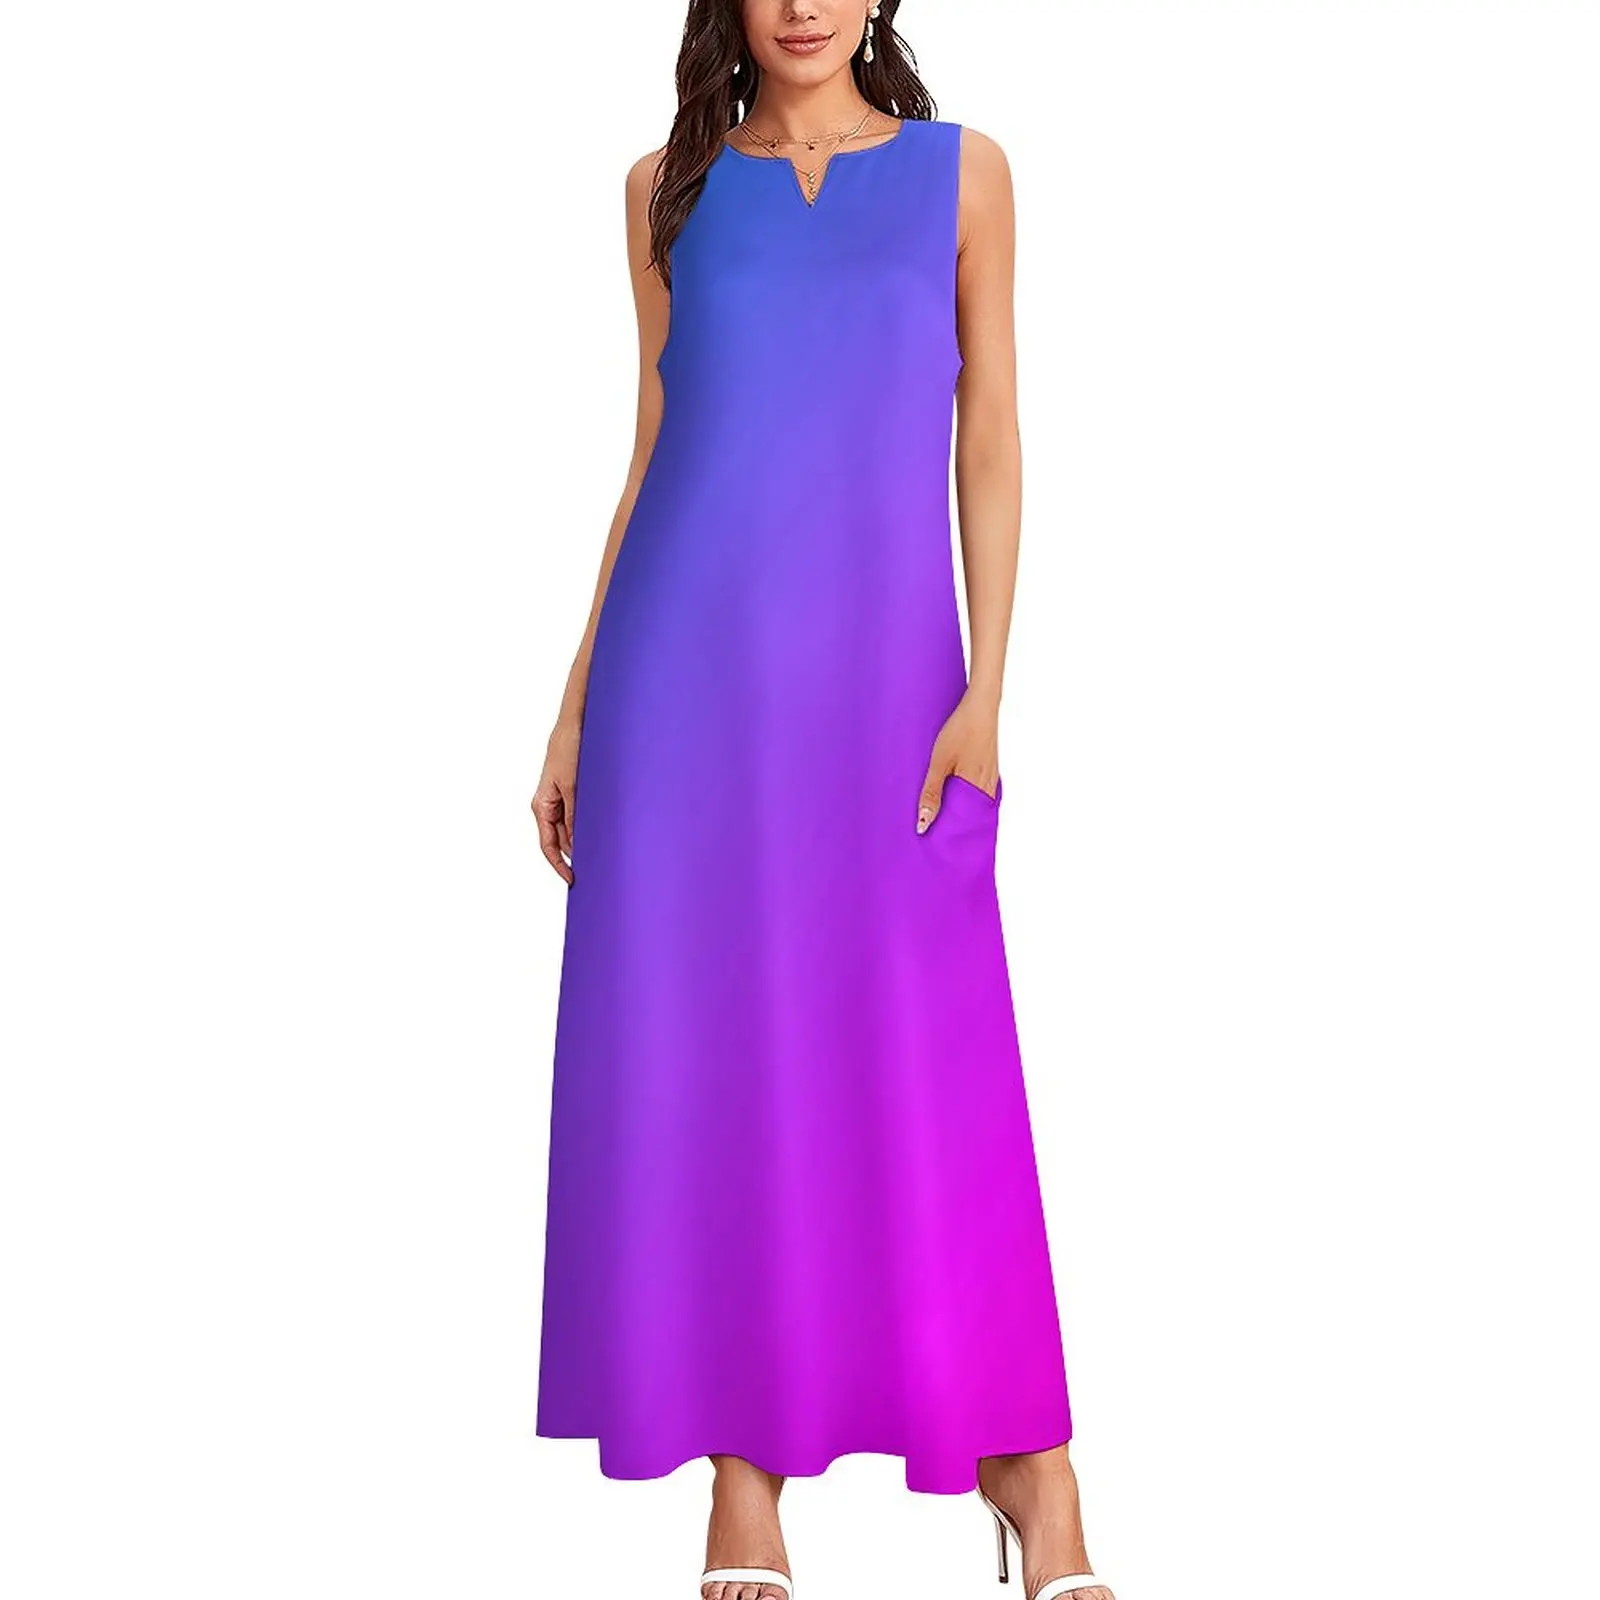 

Pink Miami Ombre Dress Summer Aqua Blue Gradient Street Fashion Casual Long Dresses Ladies Print Party Maxi Dress Big Size 5XL